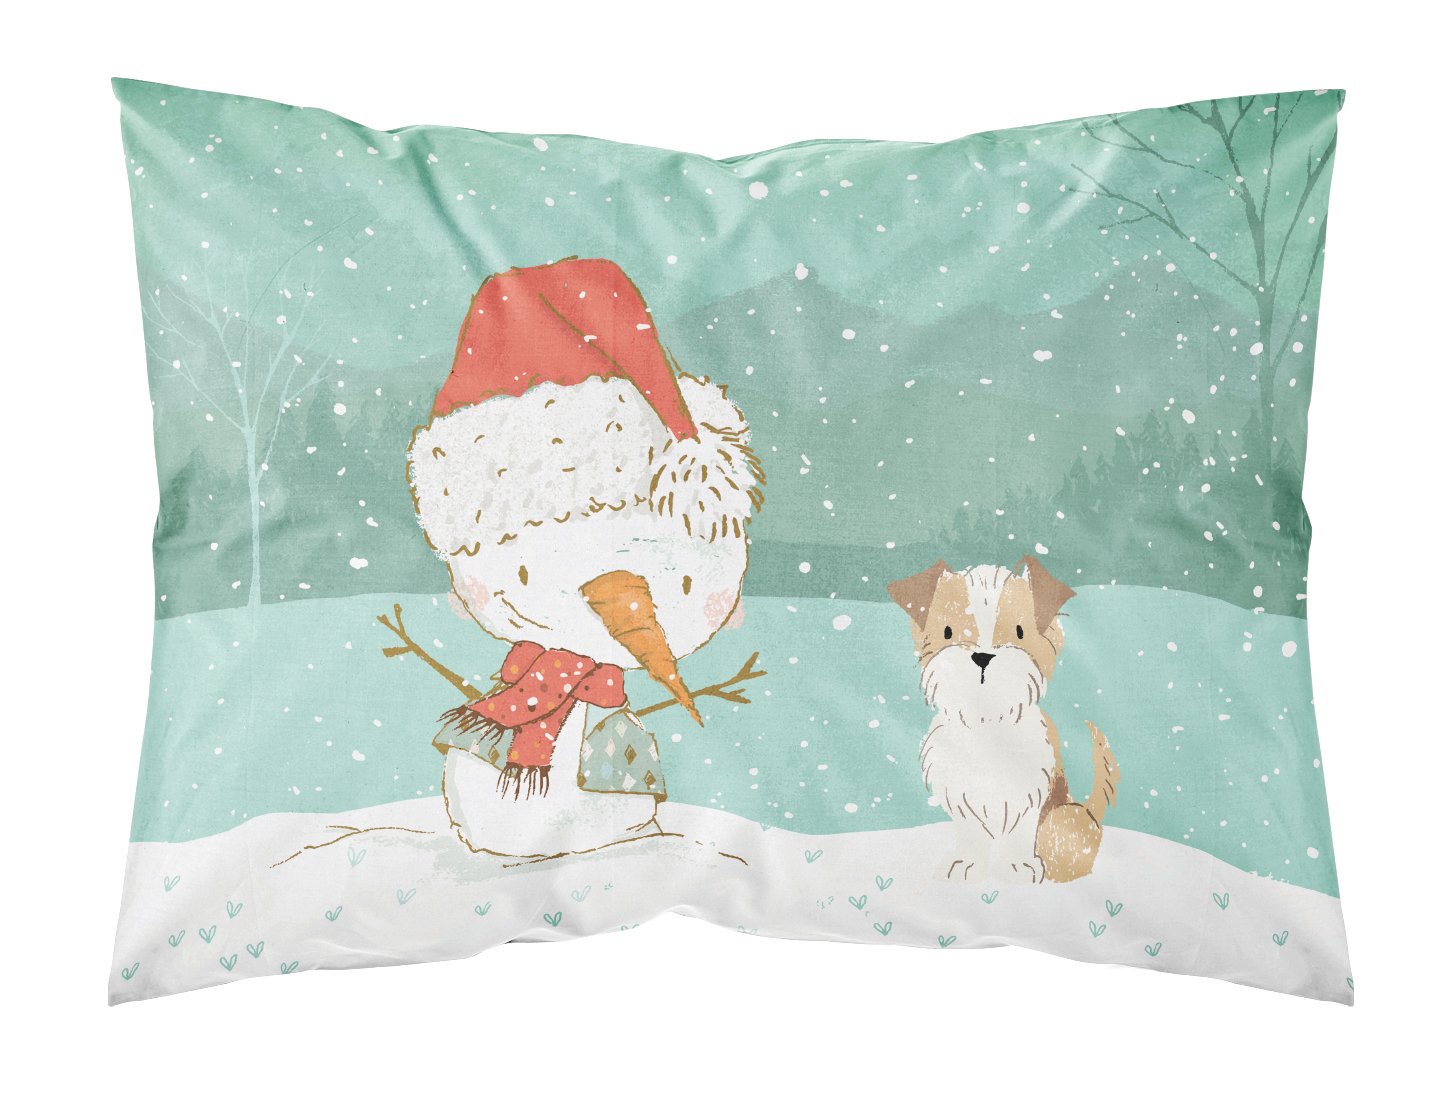 Brown and White Terrier Snowman Christmas Fabric Standard Pillowcase CK2096PILLOWCASE by Caroline's Treasures